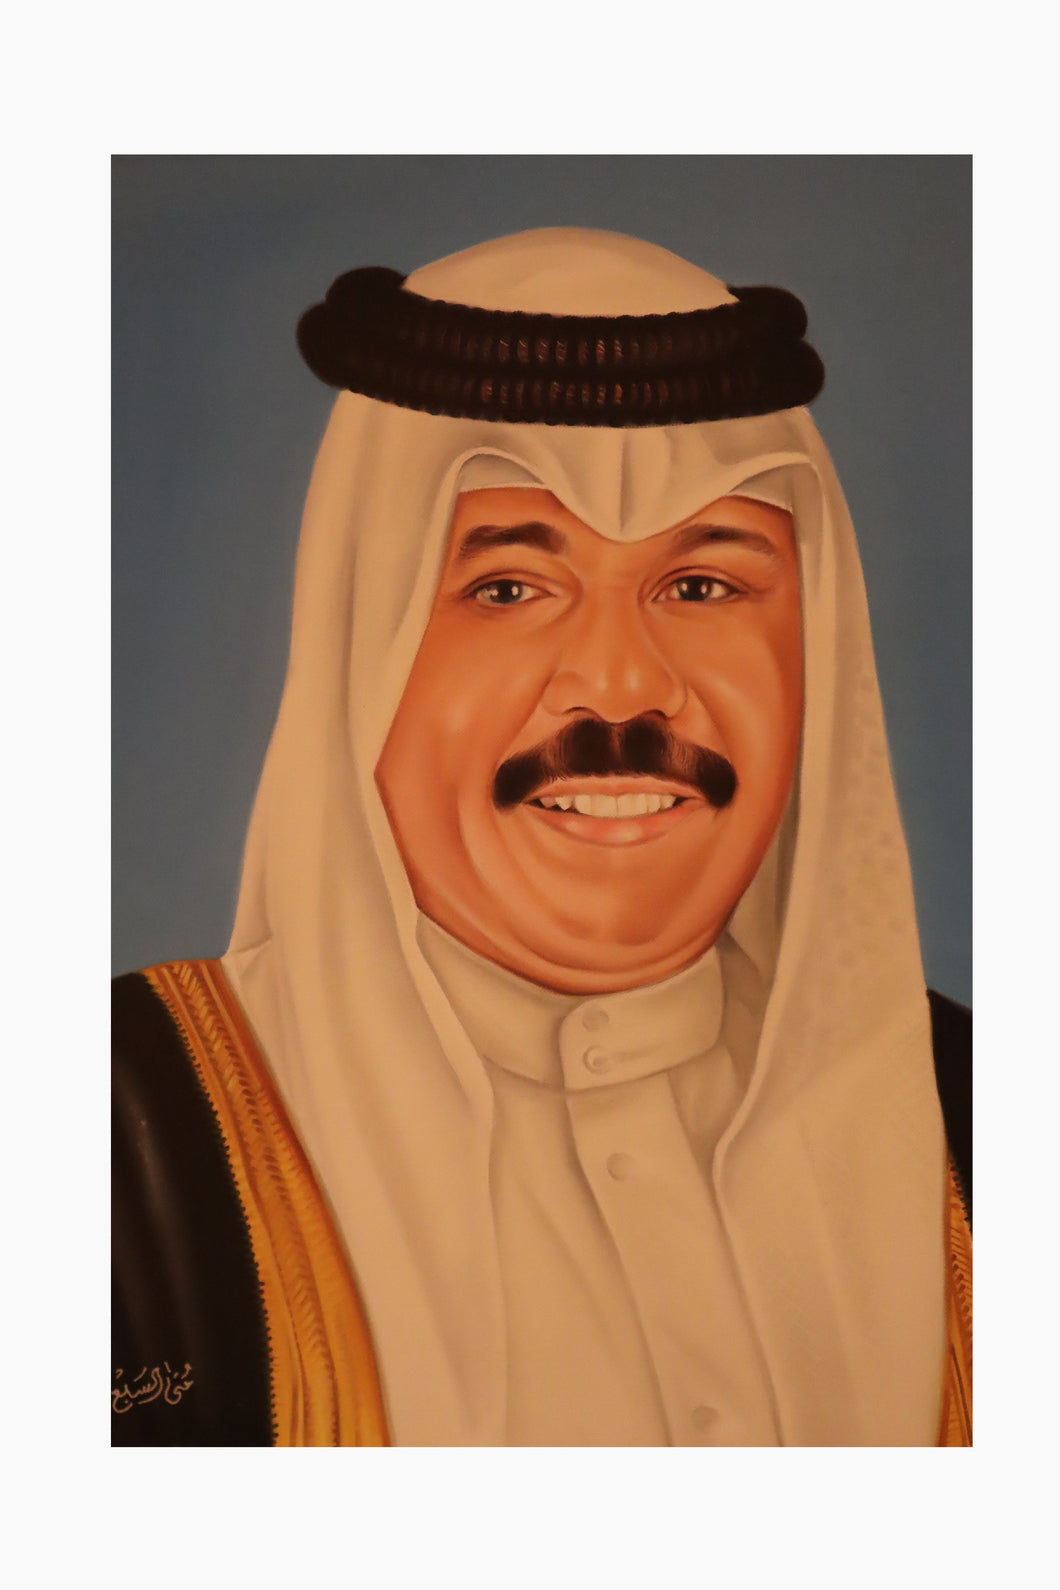 His Highness Sheikh Nawaf Al-Ahmad Al-Jaber Al-Sabah